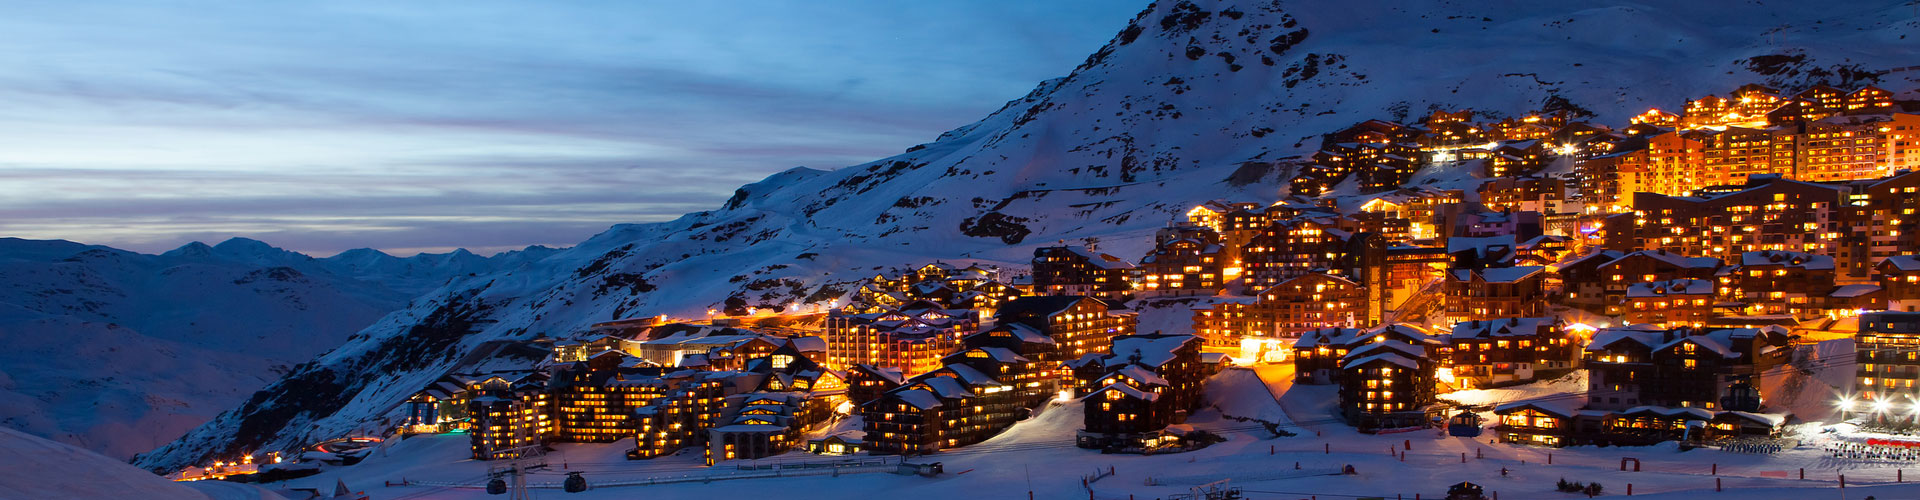 transfer Val Thorens, transfert St Martin de Bellevilles - pistes de ski